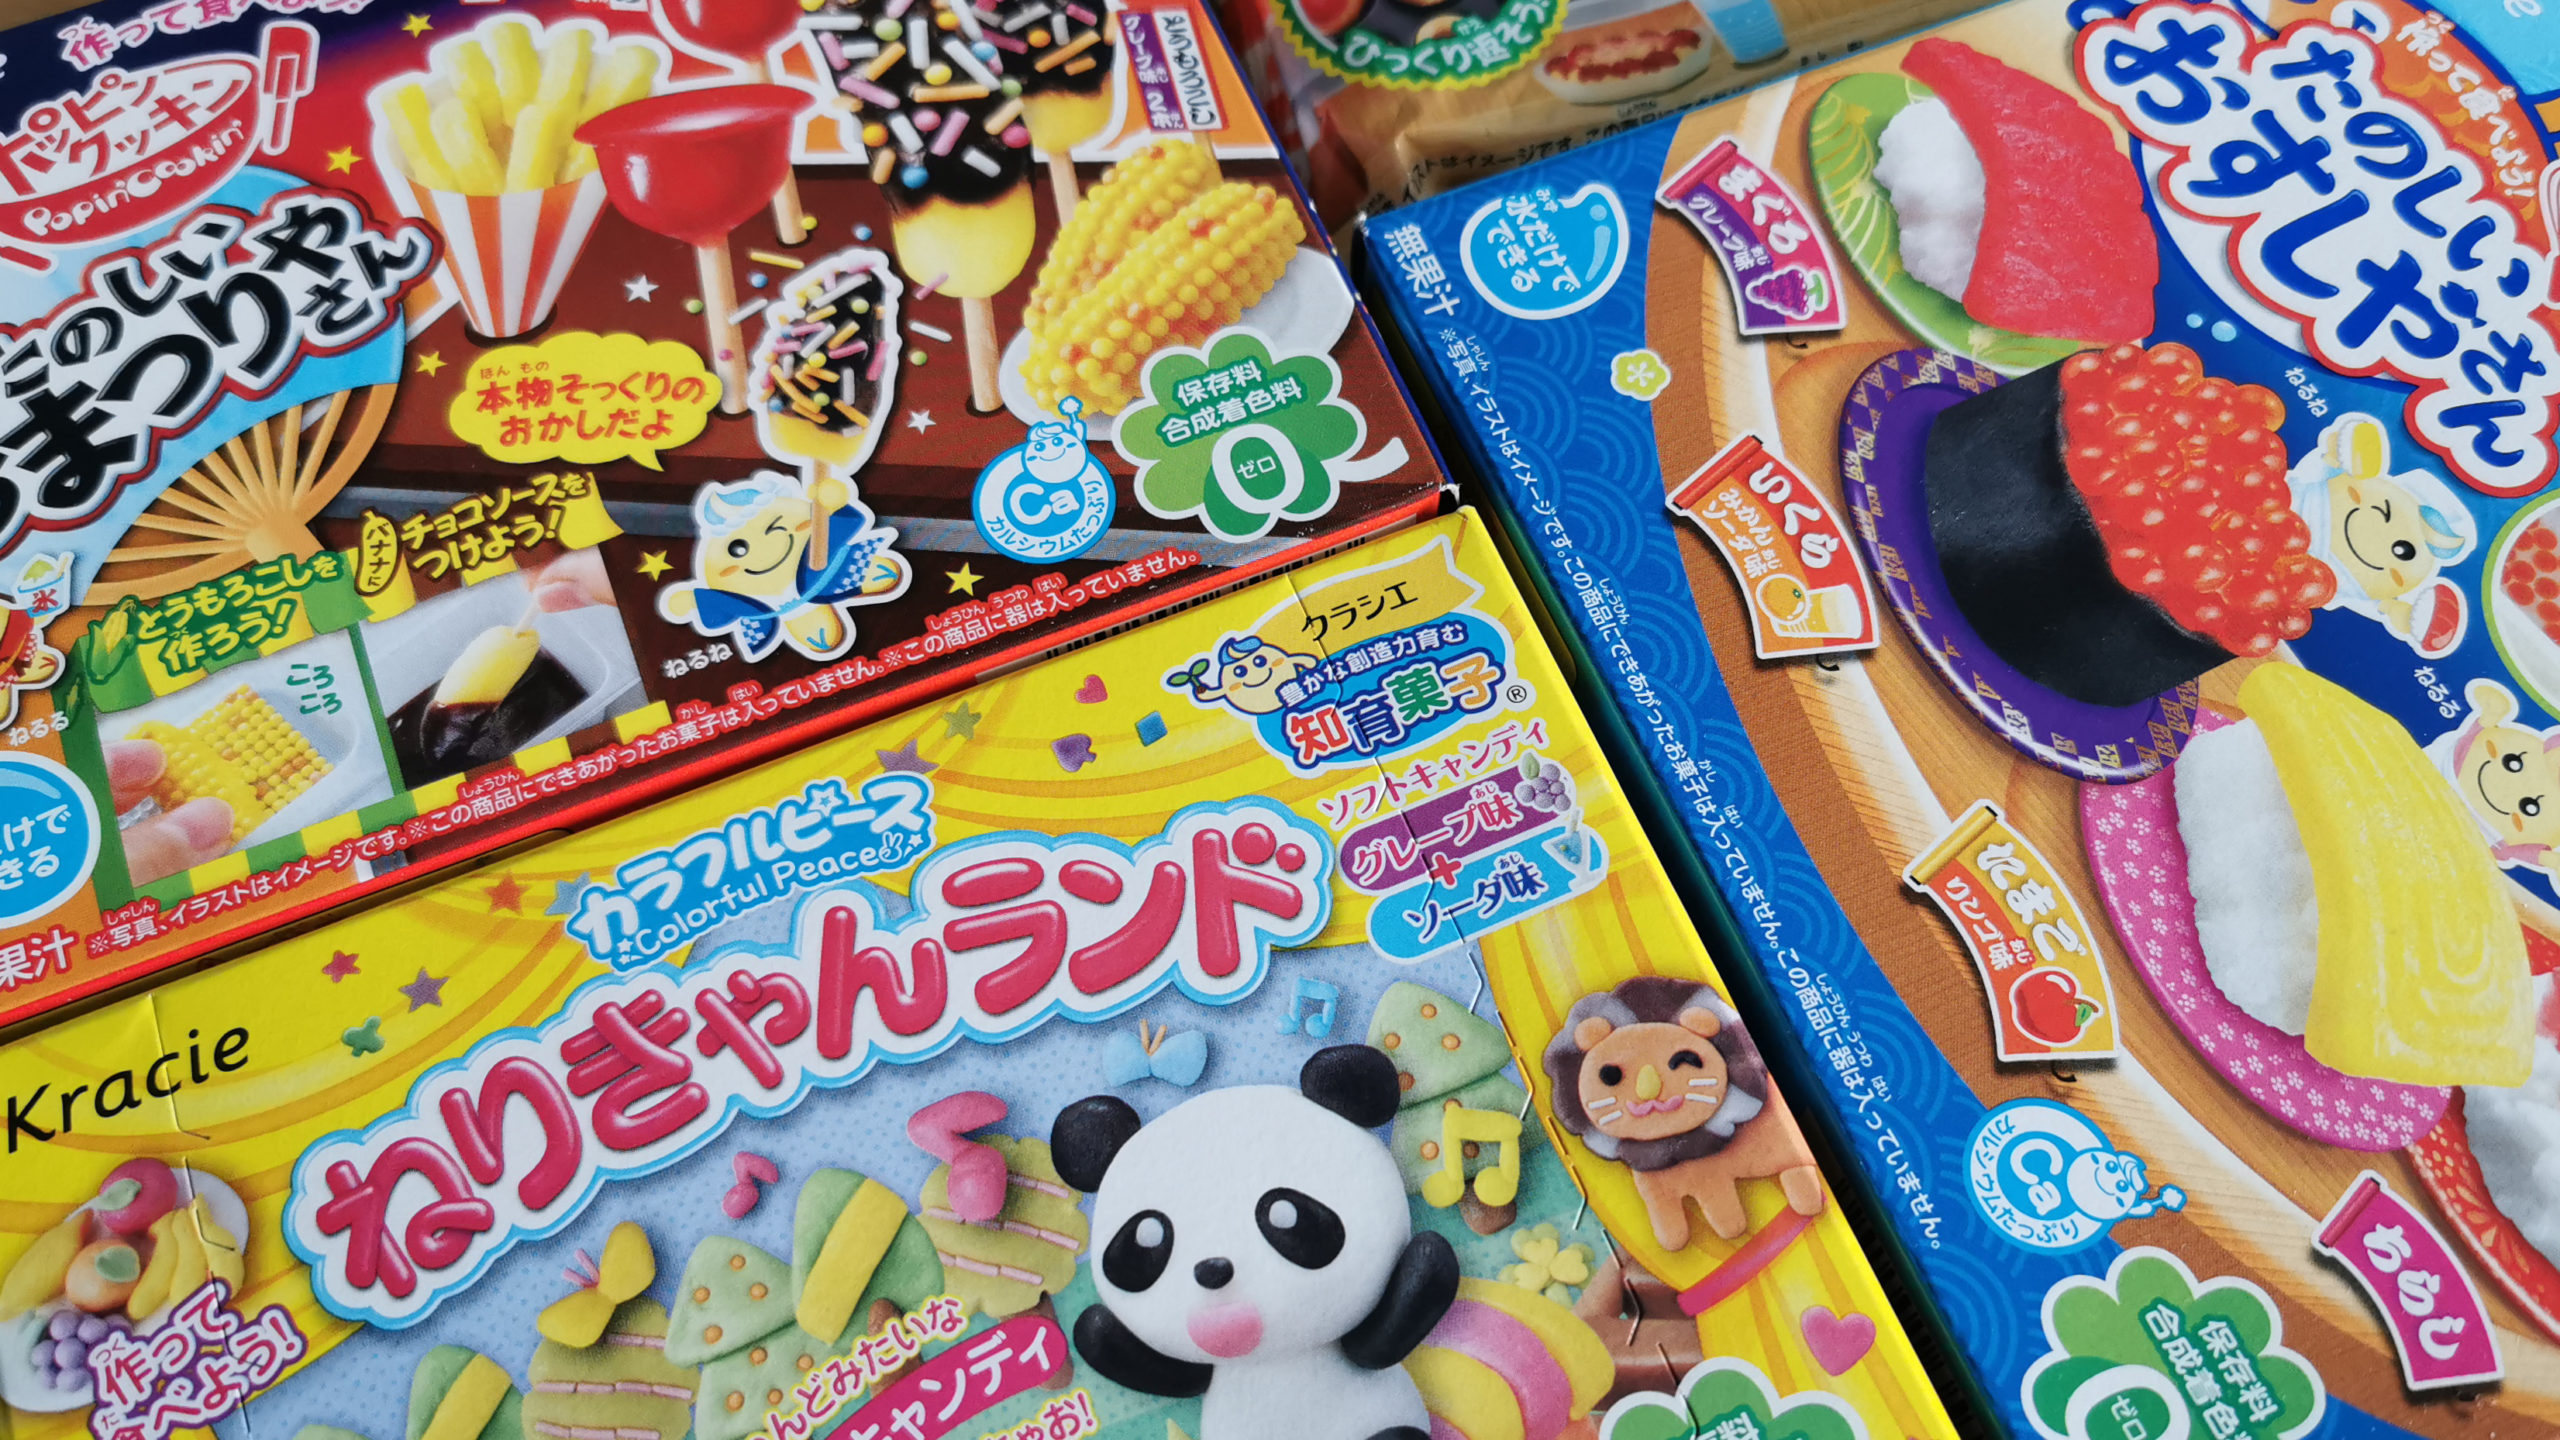 DIY Japanese Cute Candy Making Kracie Popin Cookin Sushi Made in Japan 